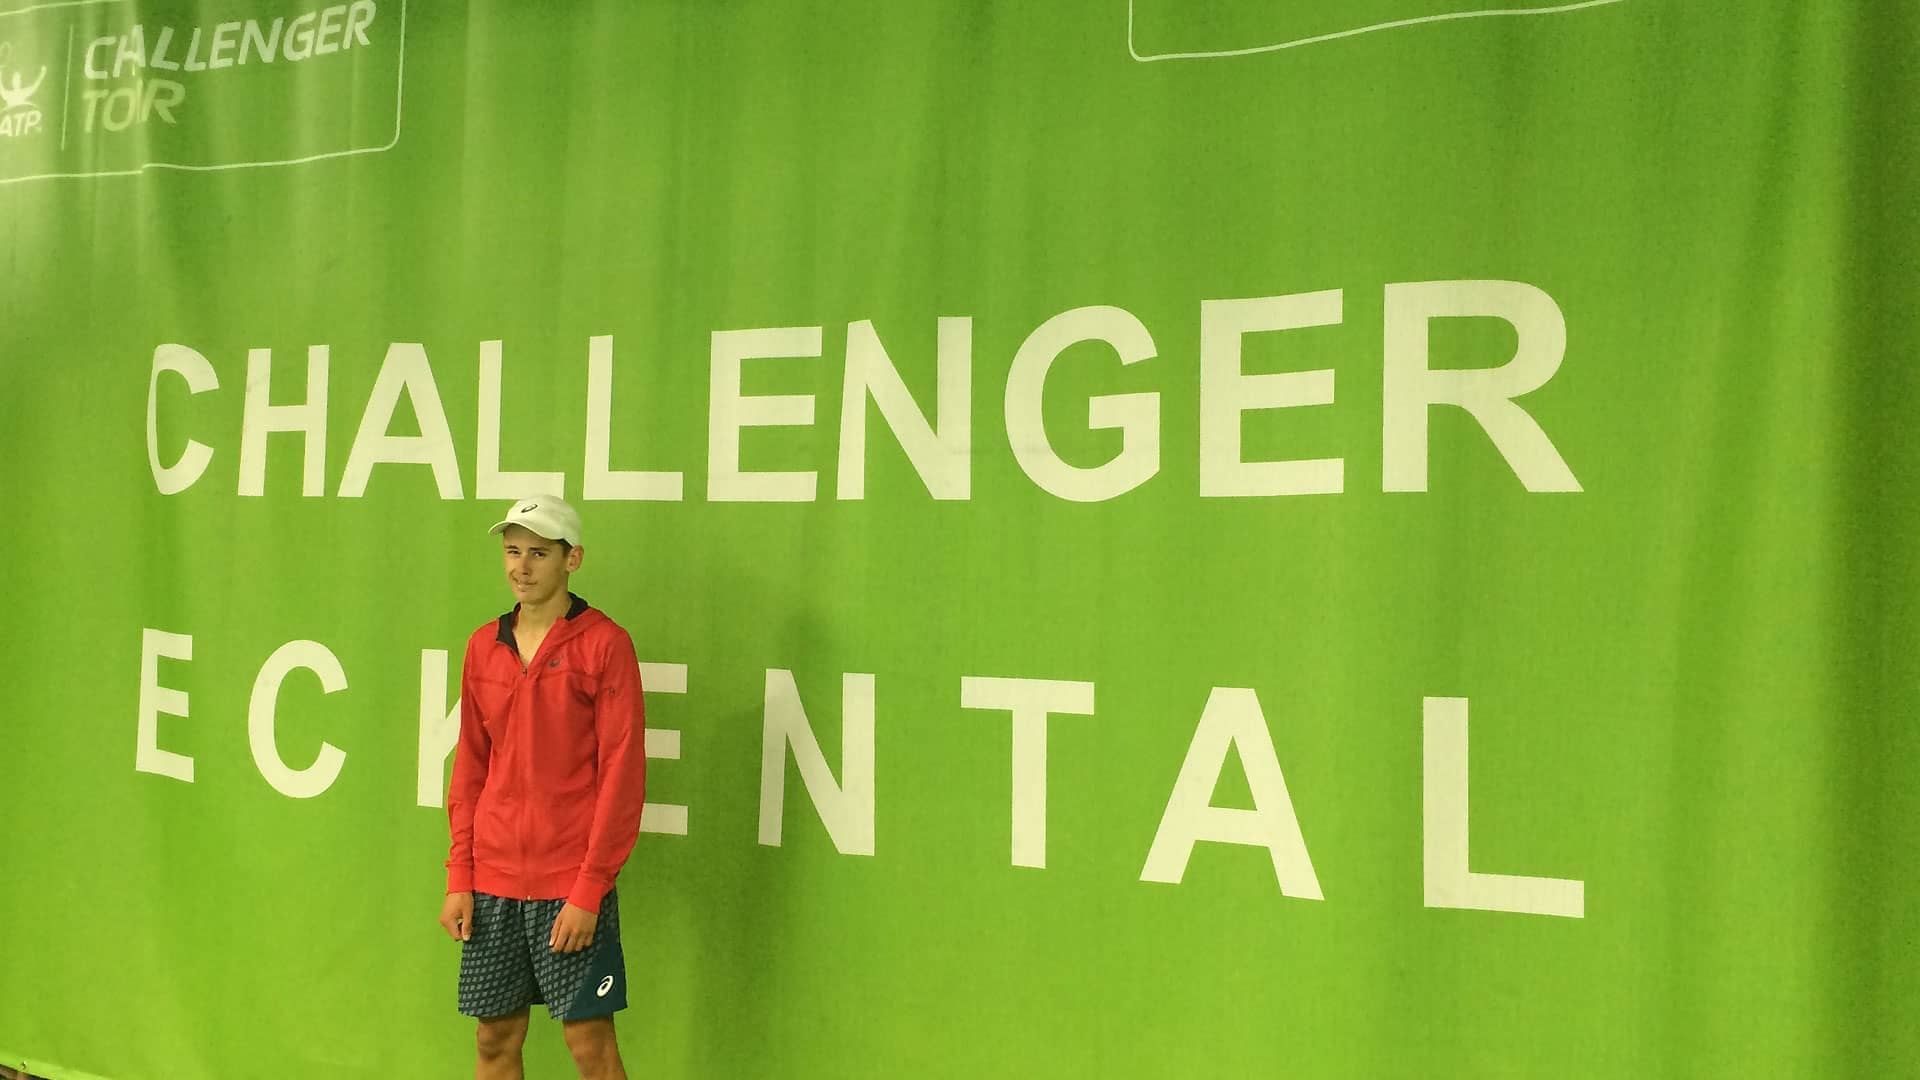 Alex De Minaur is enjoying a breakthrough week at the ATP Challenger Tour event in Eckental.